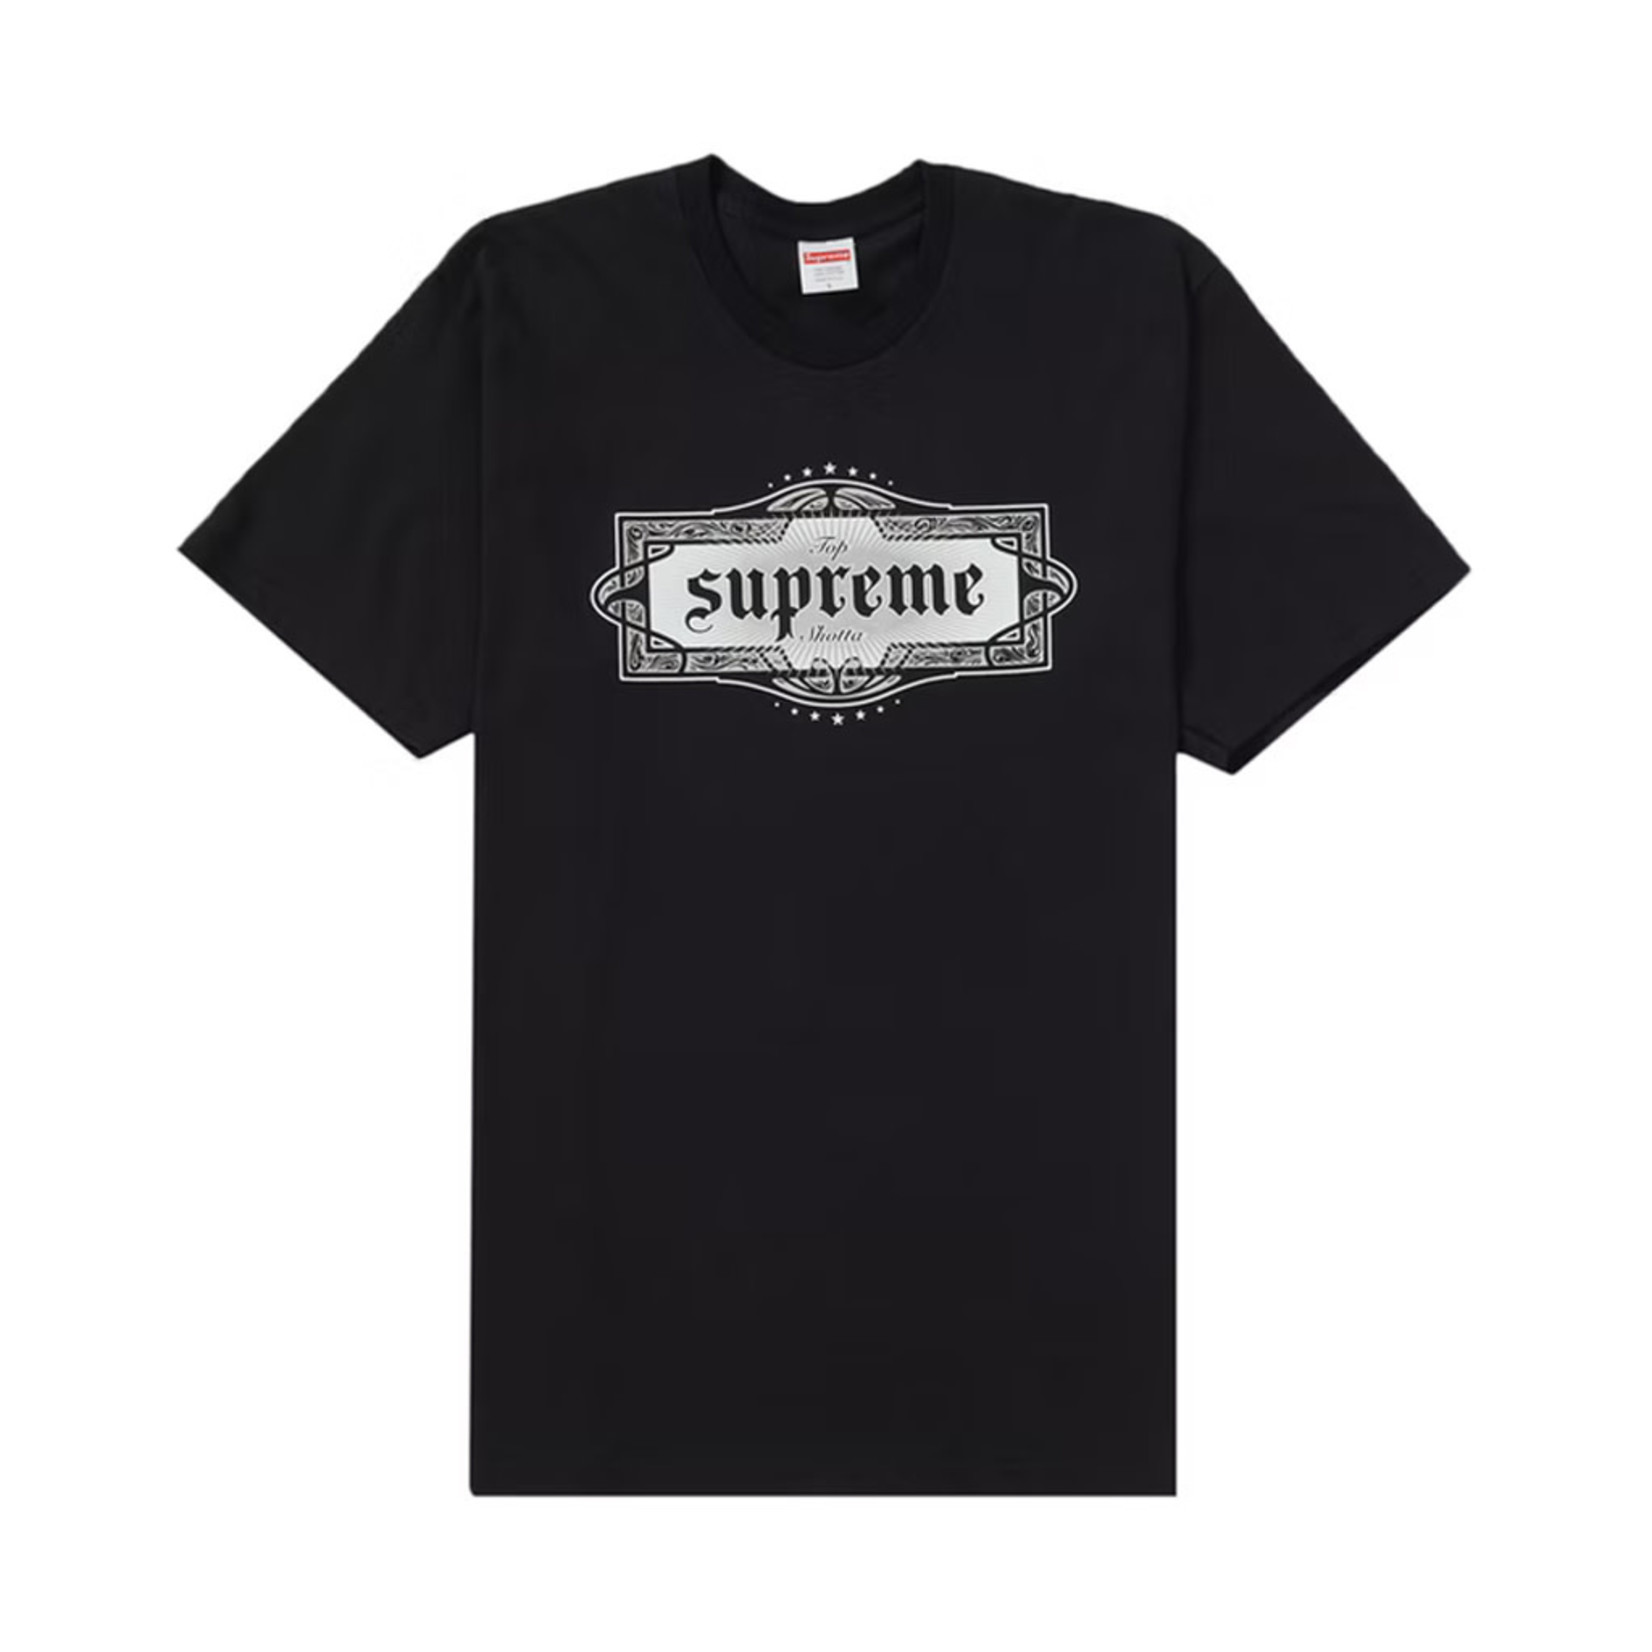 Supreme Supreme Top Shotta T-Shirt Black